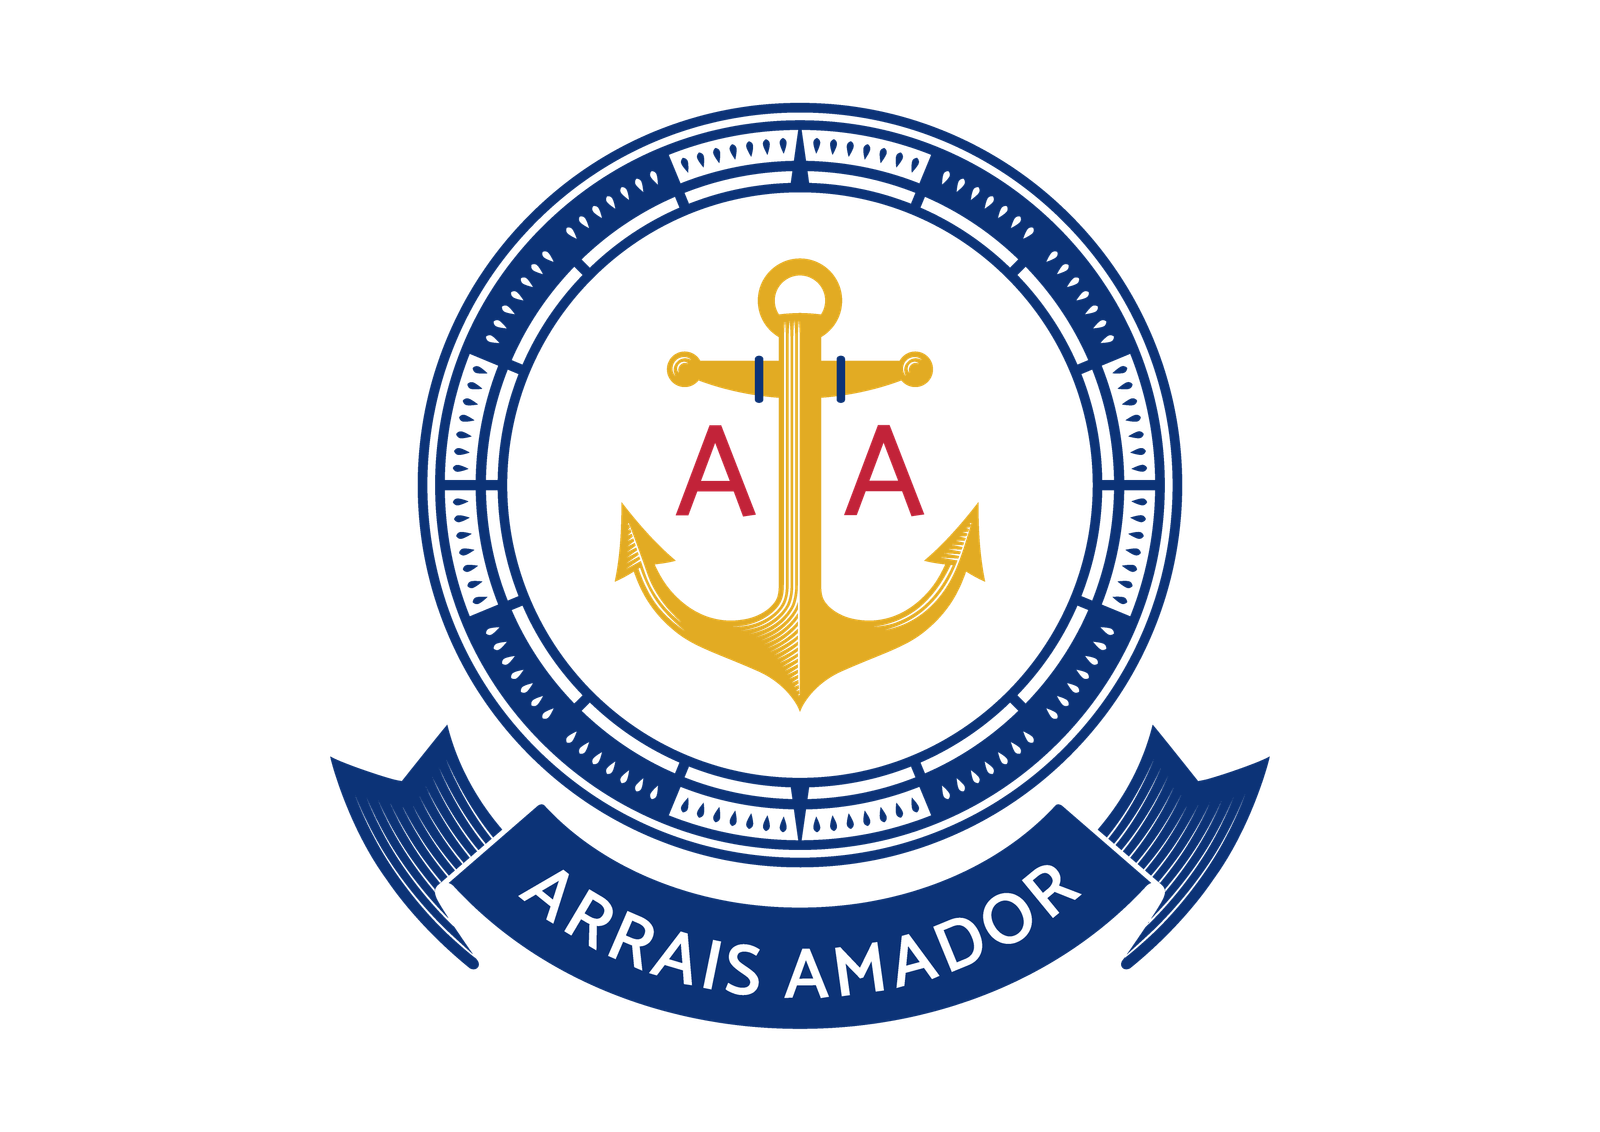 Arrais Amador